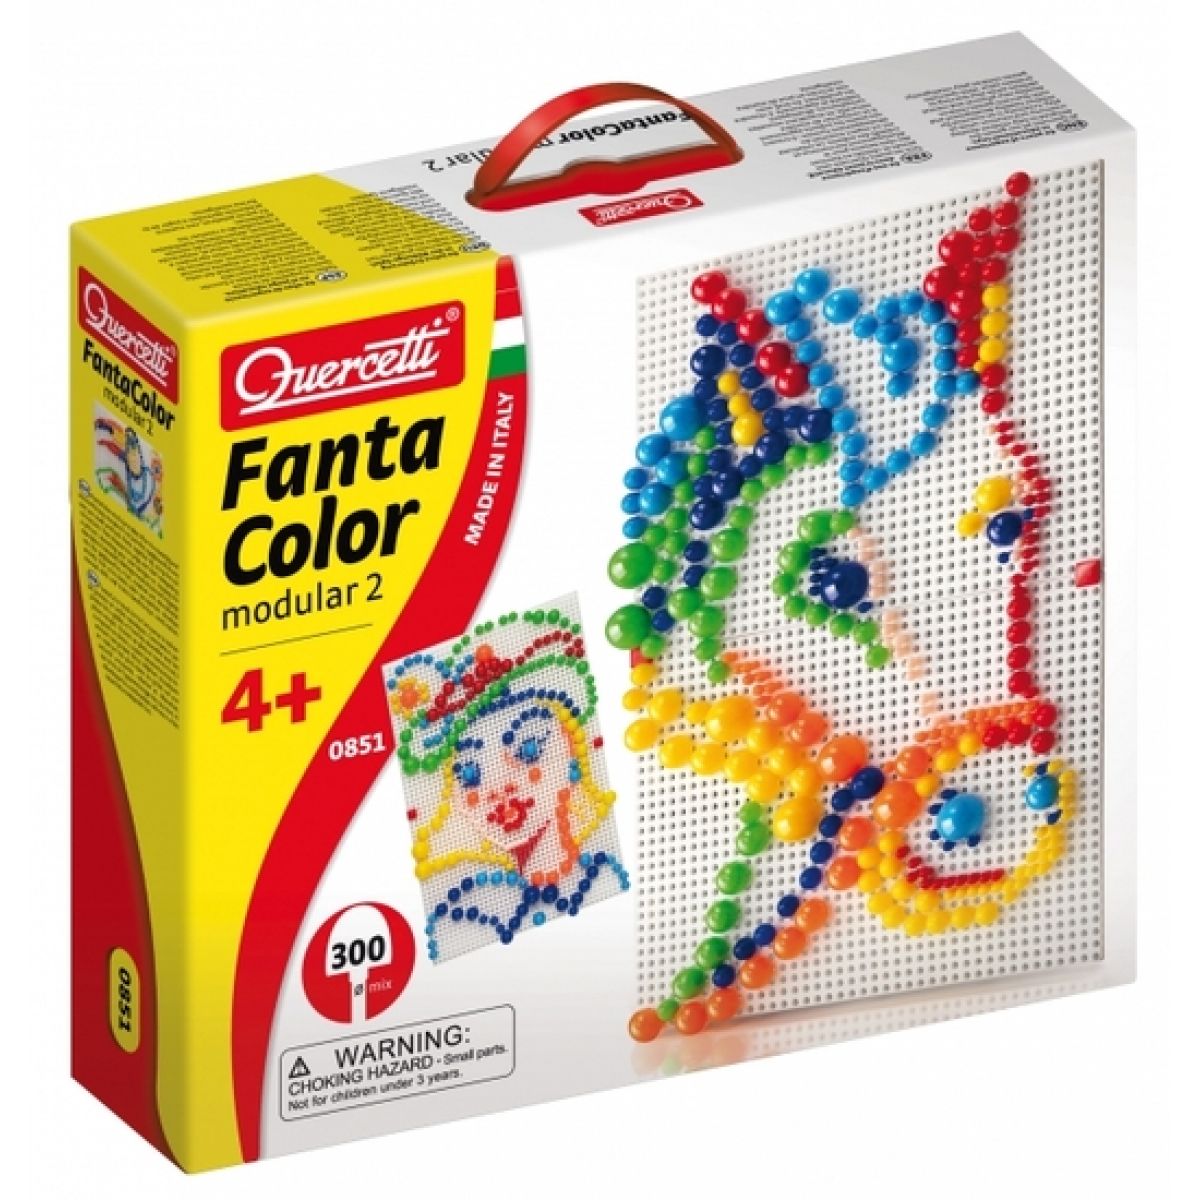 Fantacolor Modular 2 Quercetti 0851